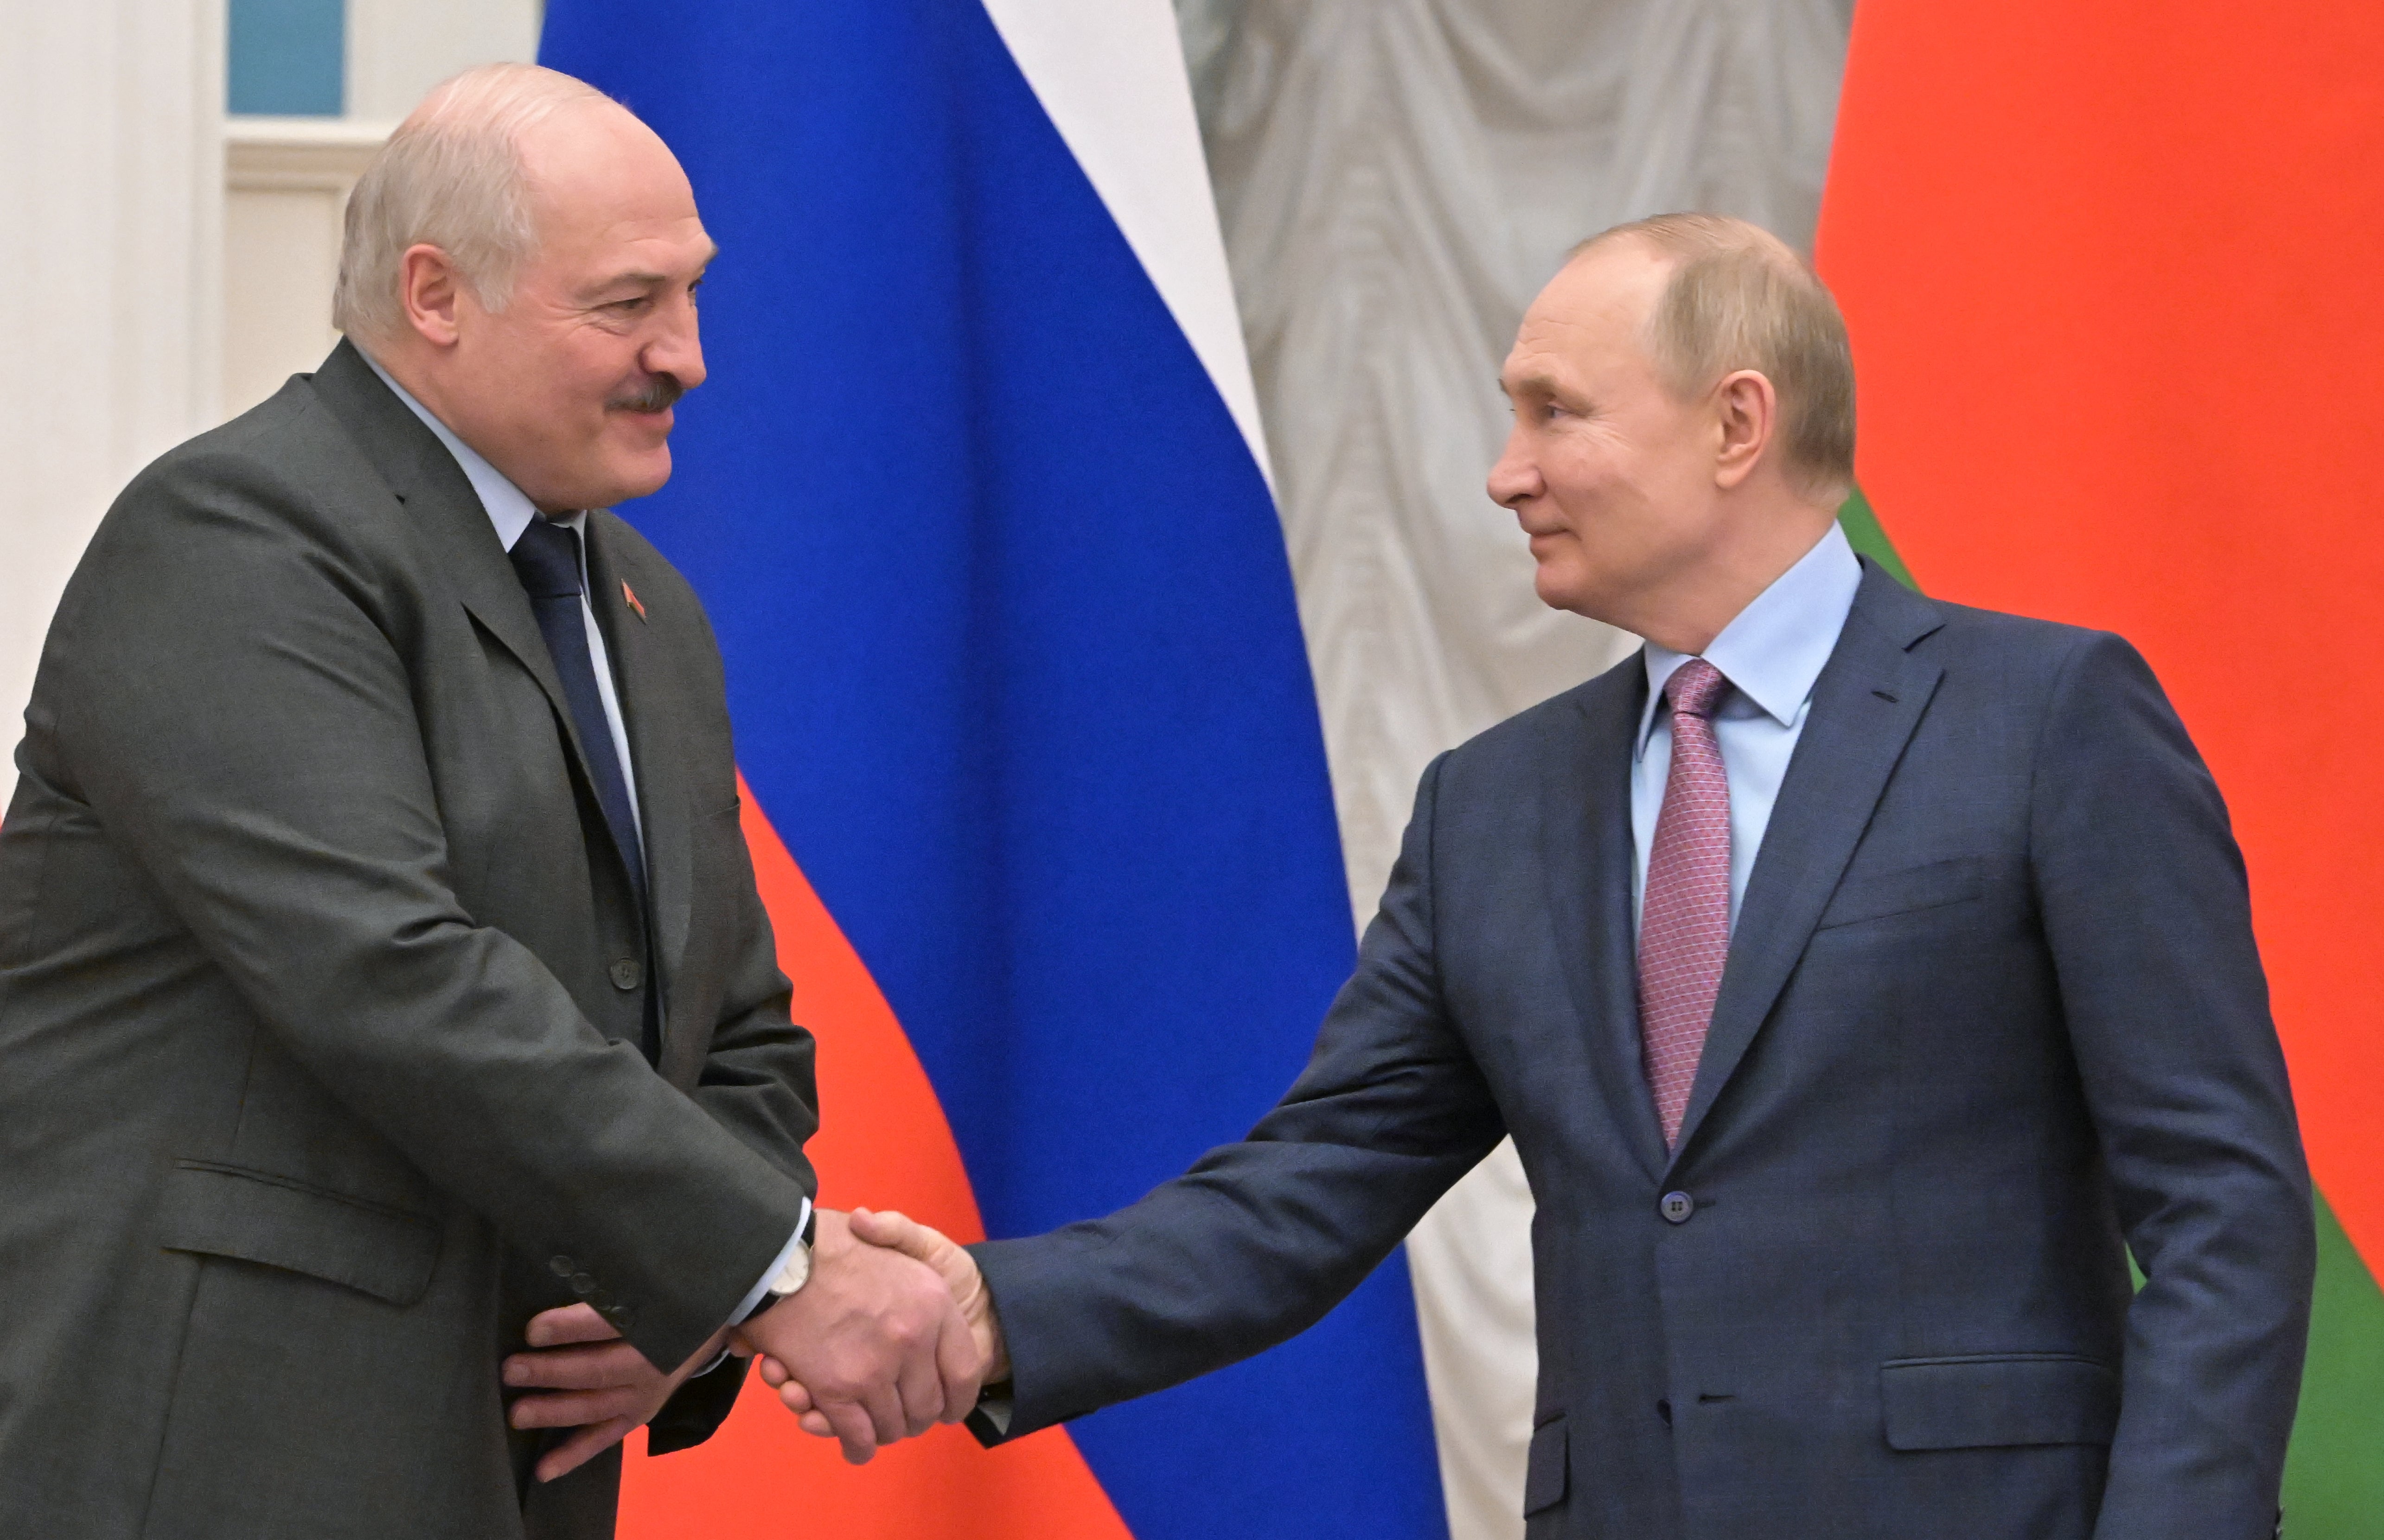 Vladimir Putin and his Belarusian ally Alexander Lukashenko